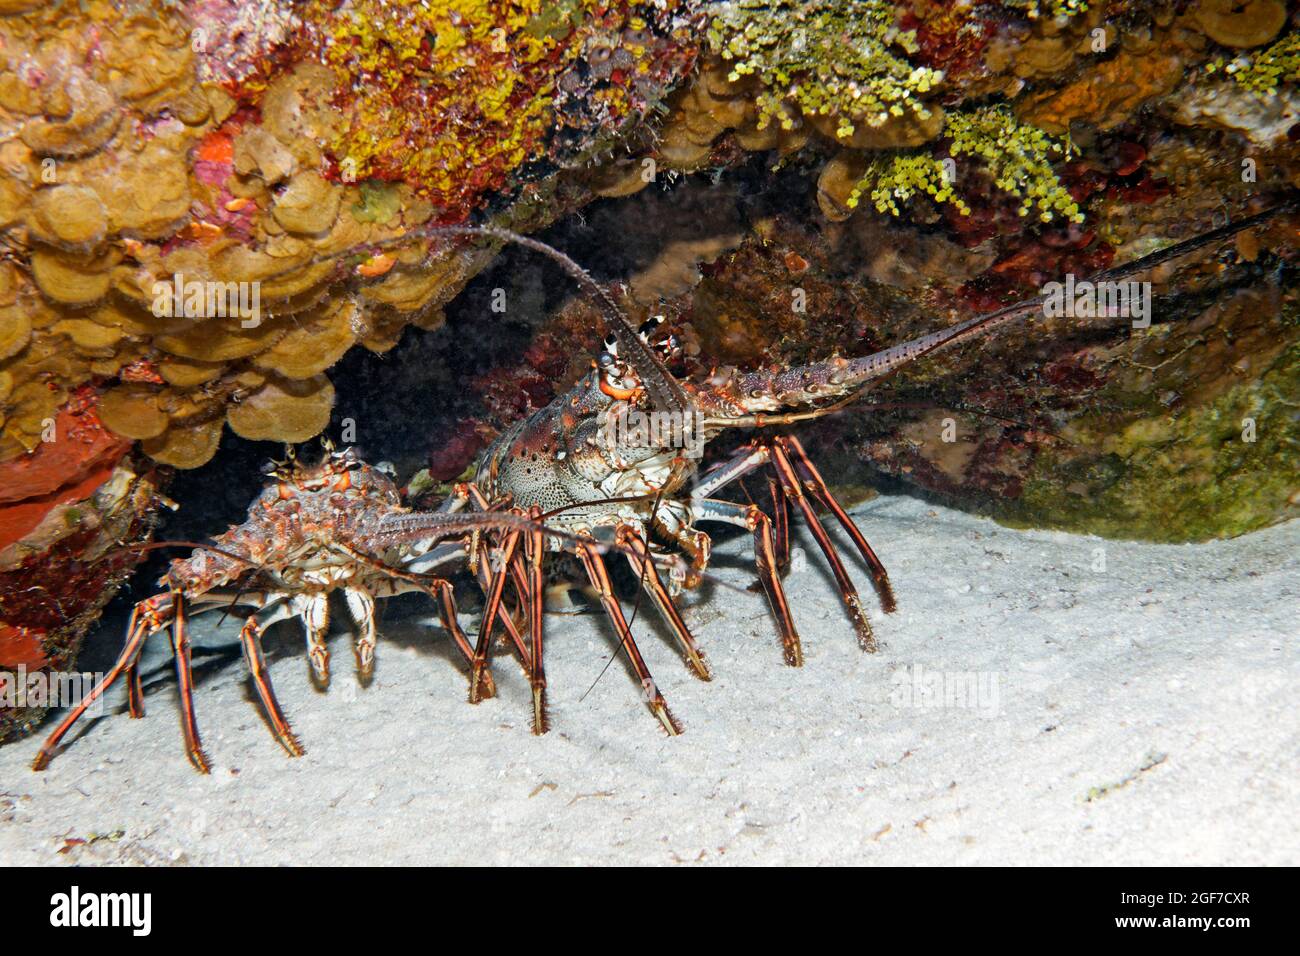 Caribbean spiny crayfish (Panulirus argus), two animals in shelter, Caribbean Sea near Maria la Gorda, Pinar del Rio Province, Caribbean, Cuba Stock Photo